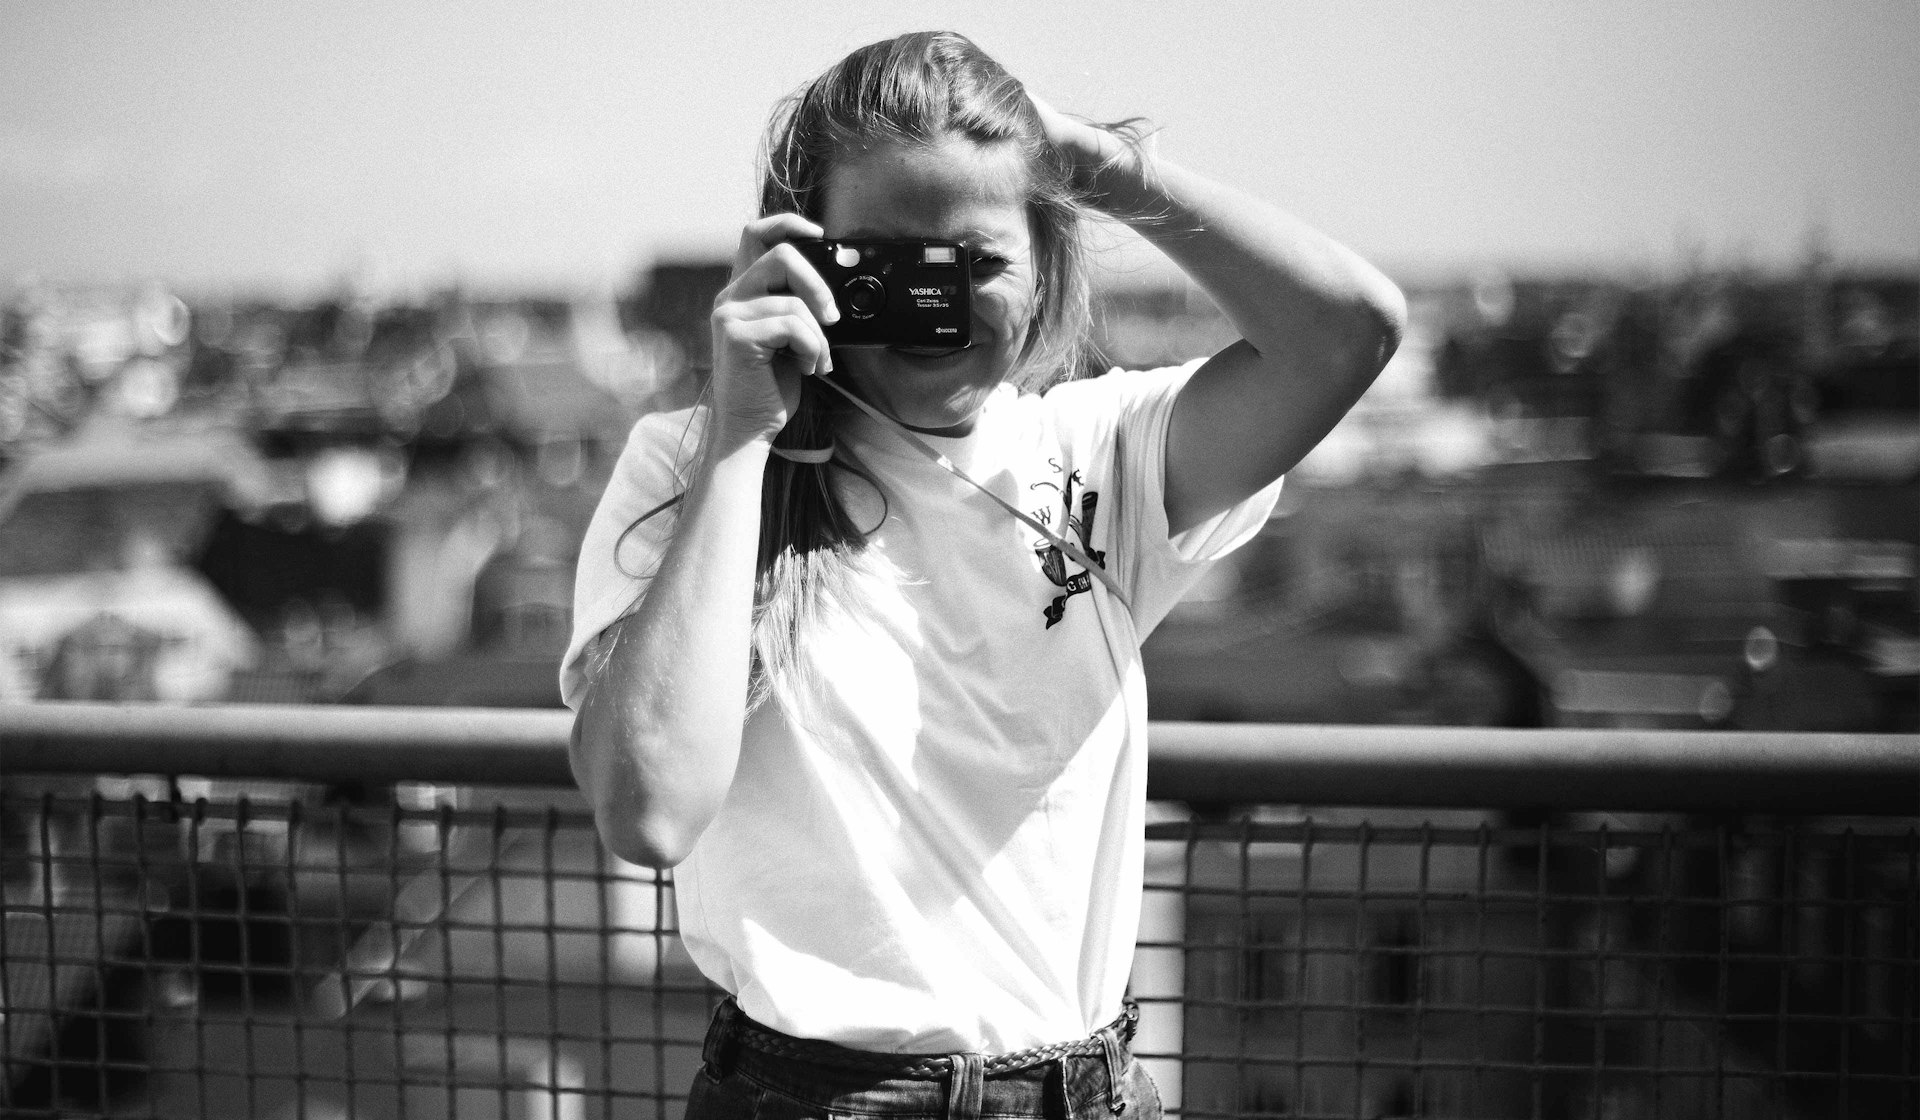 Skate photographer Sarah Meurle brings her Swedish cool to Copenhagen